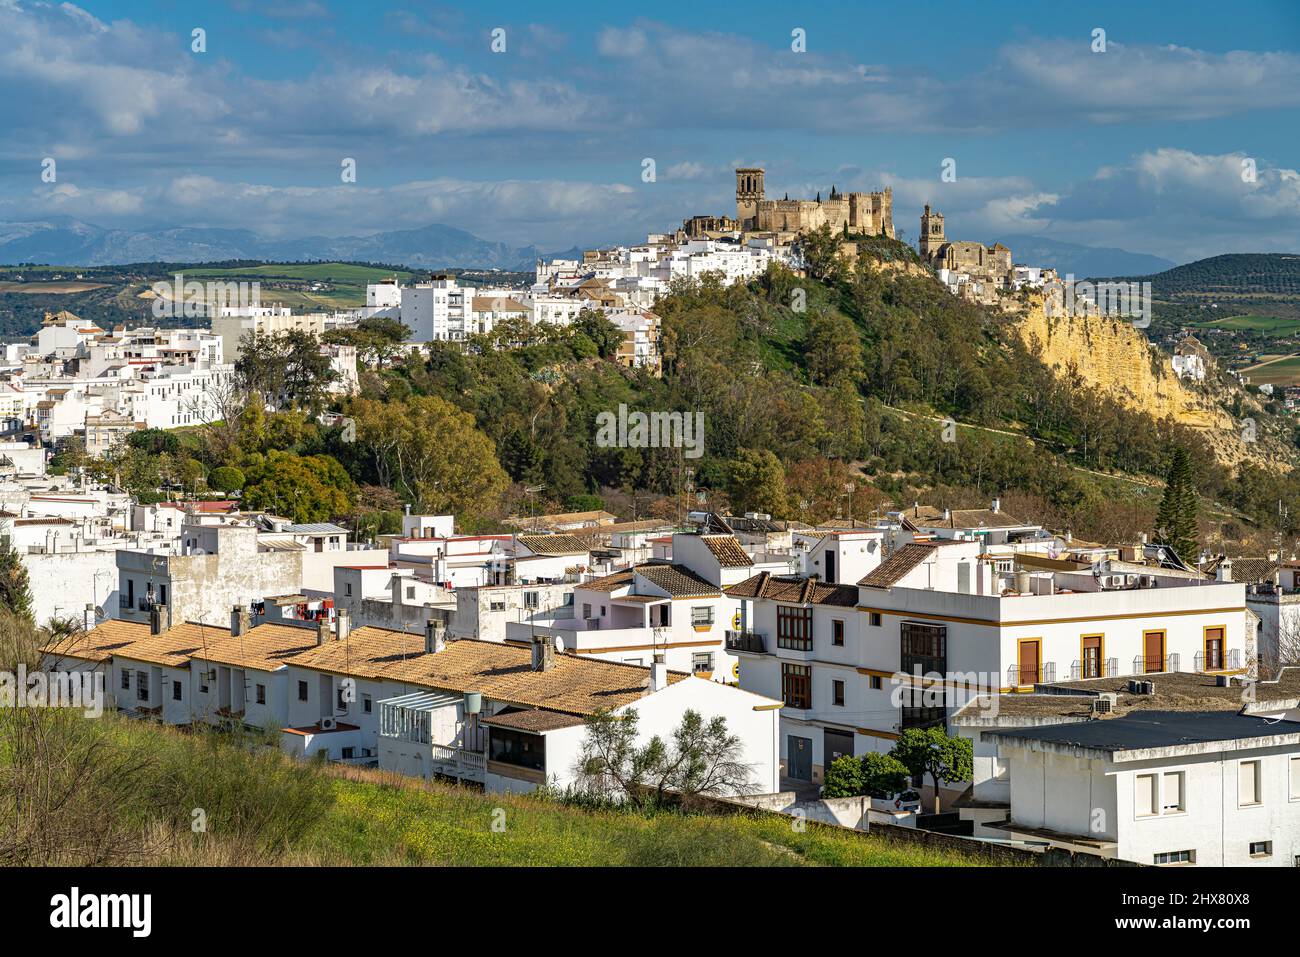 Die weissen Häuser von Arcos de la Coronca, Andalusien, Spanien | die weißen Häuser von Arcos de la Coronca, Andalusien, Spanien Stockfoto